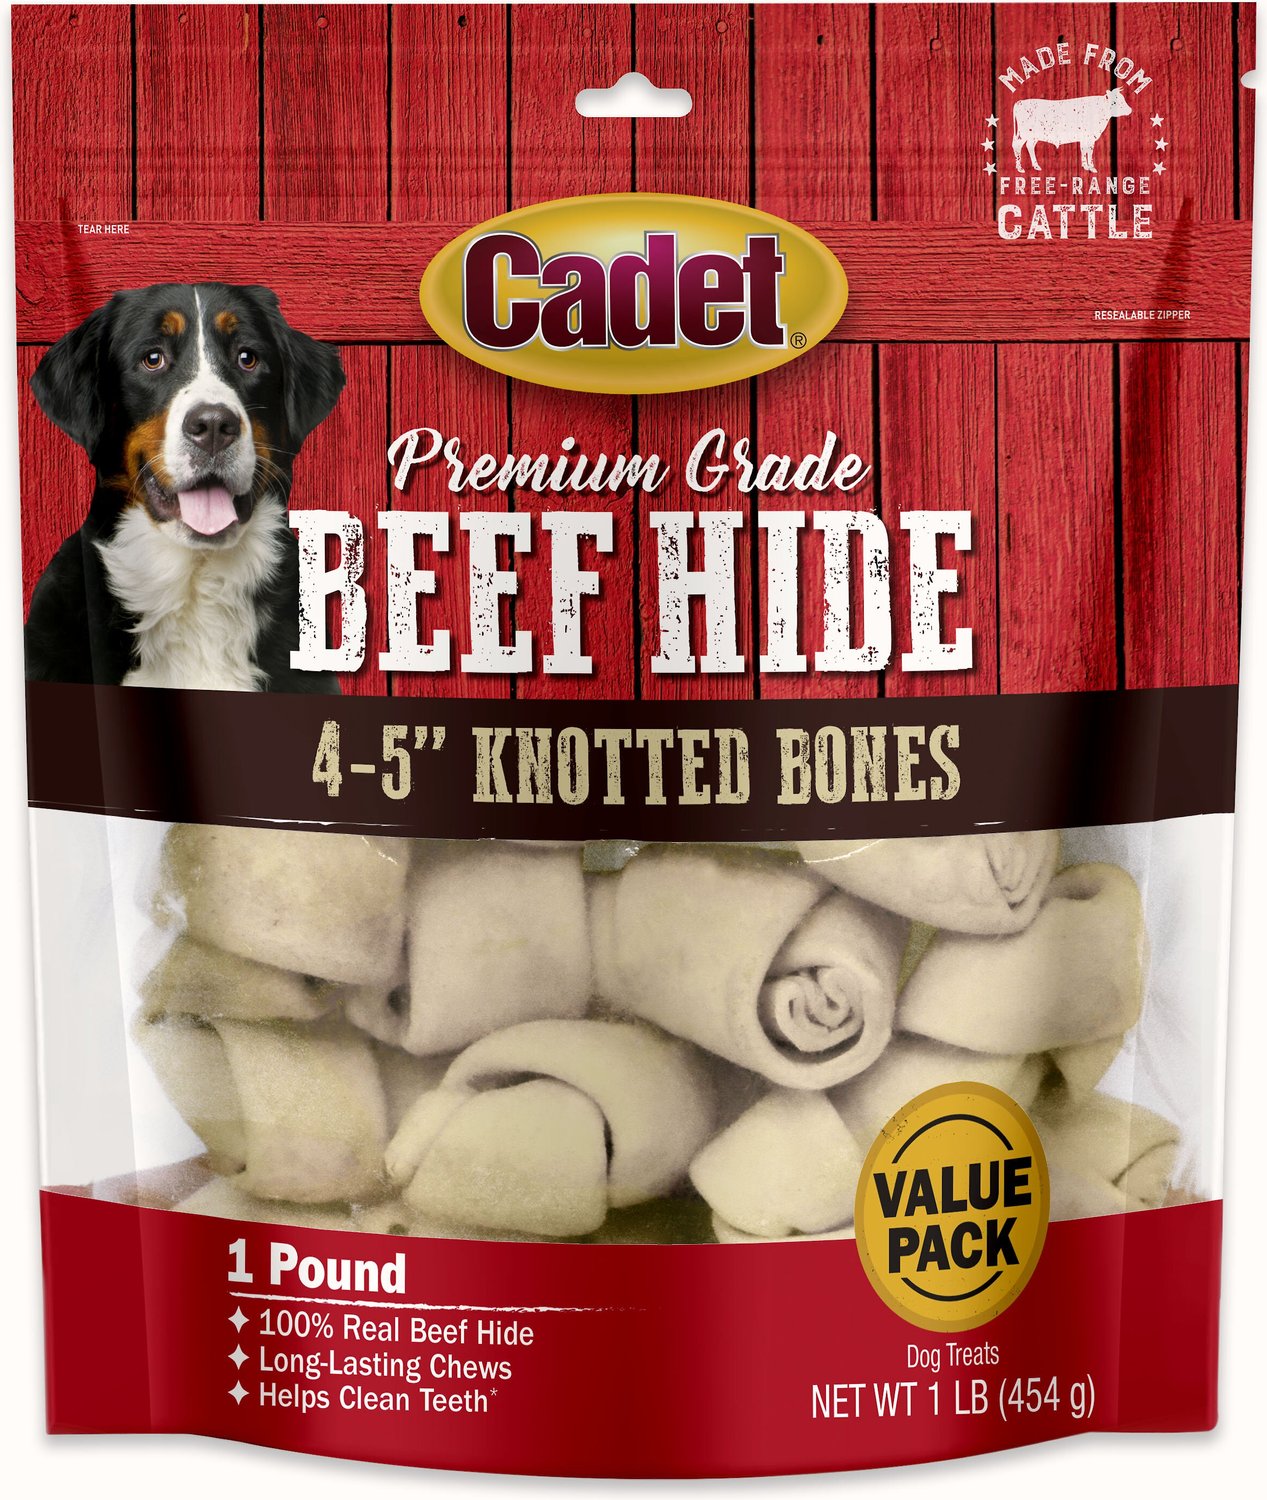 cadet rawhide bones